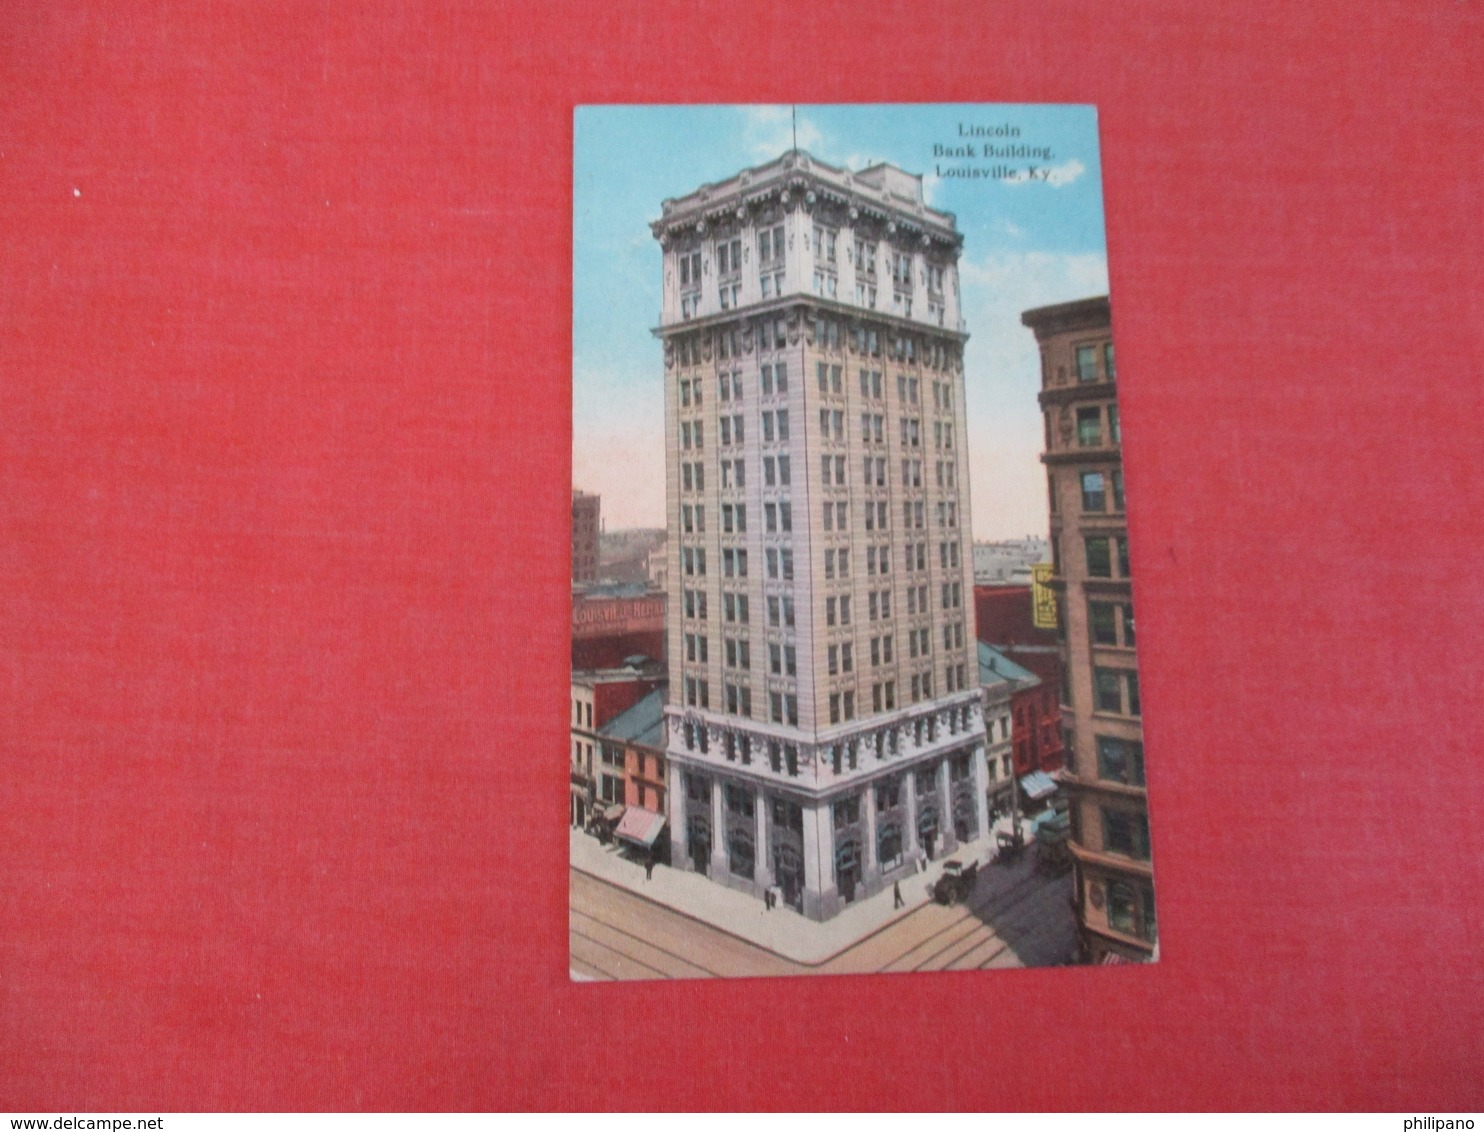 Lincoln Bank Building   - Kentucky > Louisville    Ref 3048 - Louisville